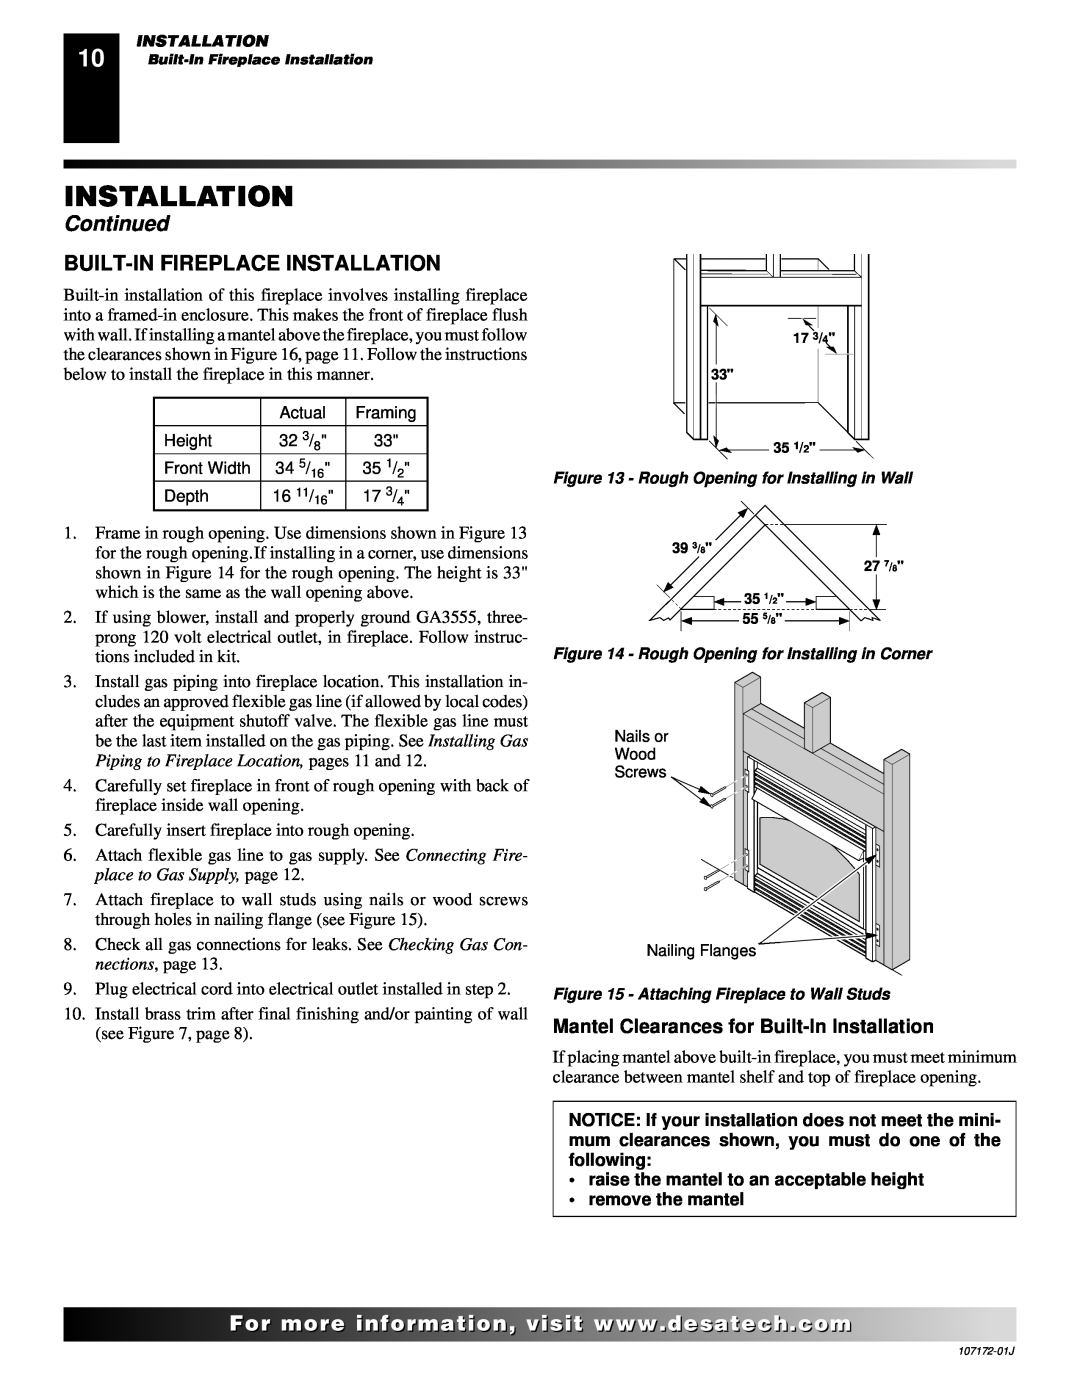 Desa EFS33PRA installation manual Built-Infireplace Installation, Mantel Clearances for Built-InInstallation, Continued 